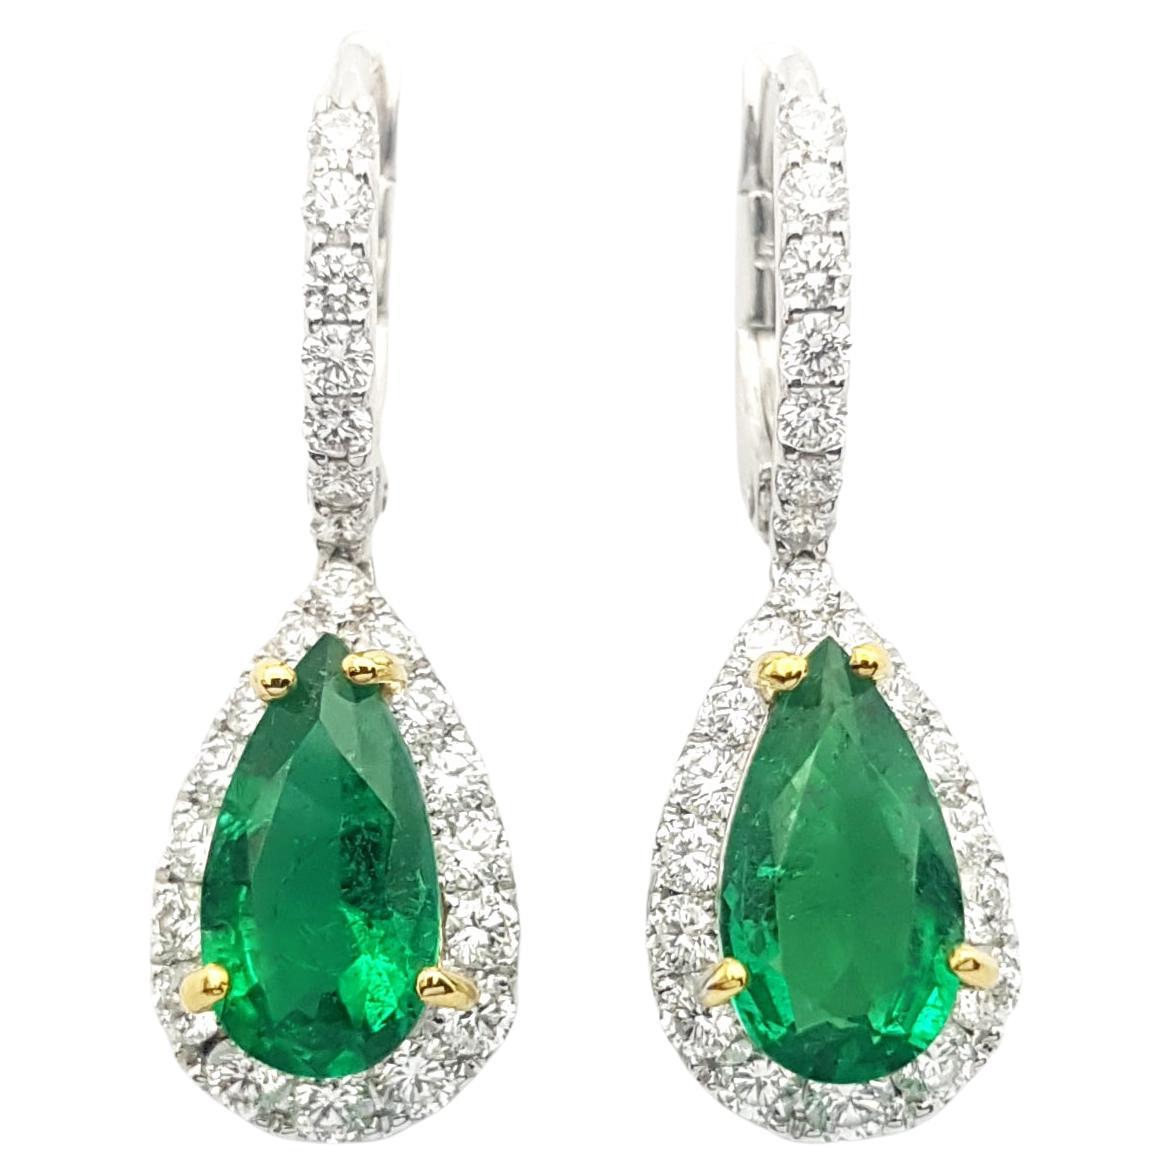 Pear Shape Emerald with Diamond Earrings Set in 18k White Gold Settings